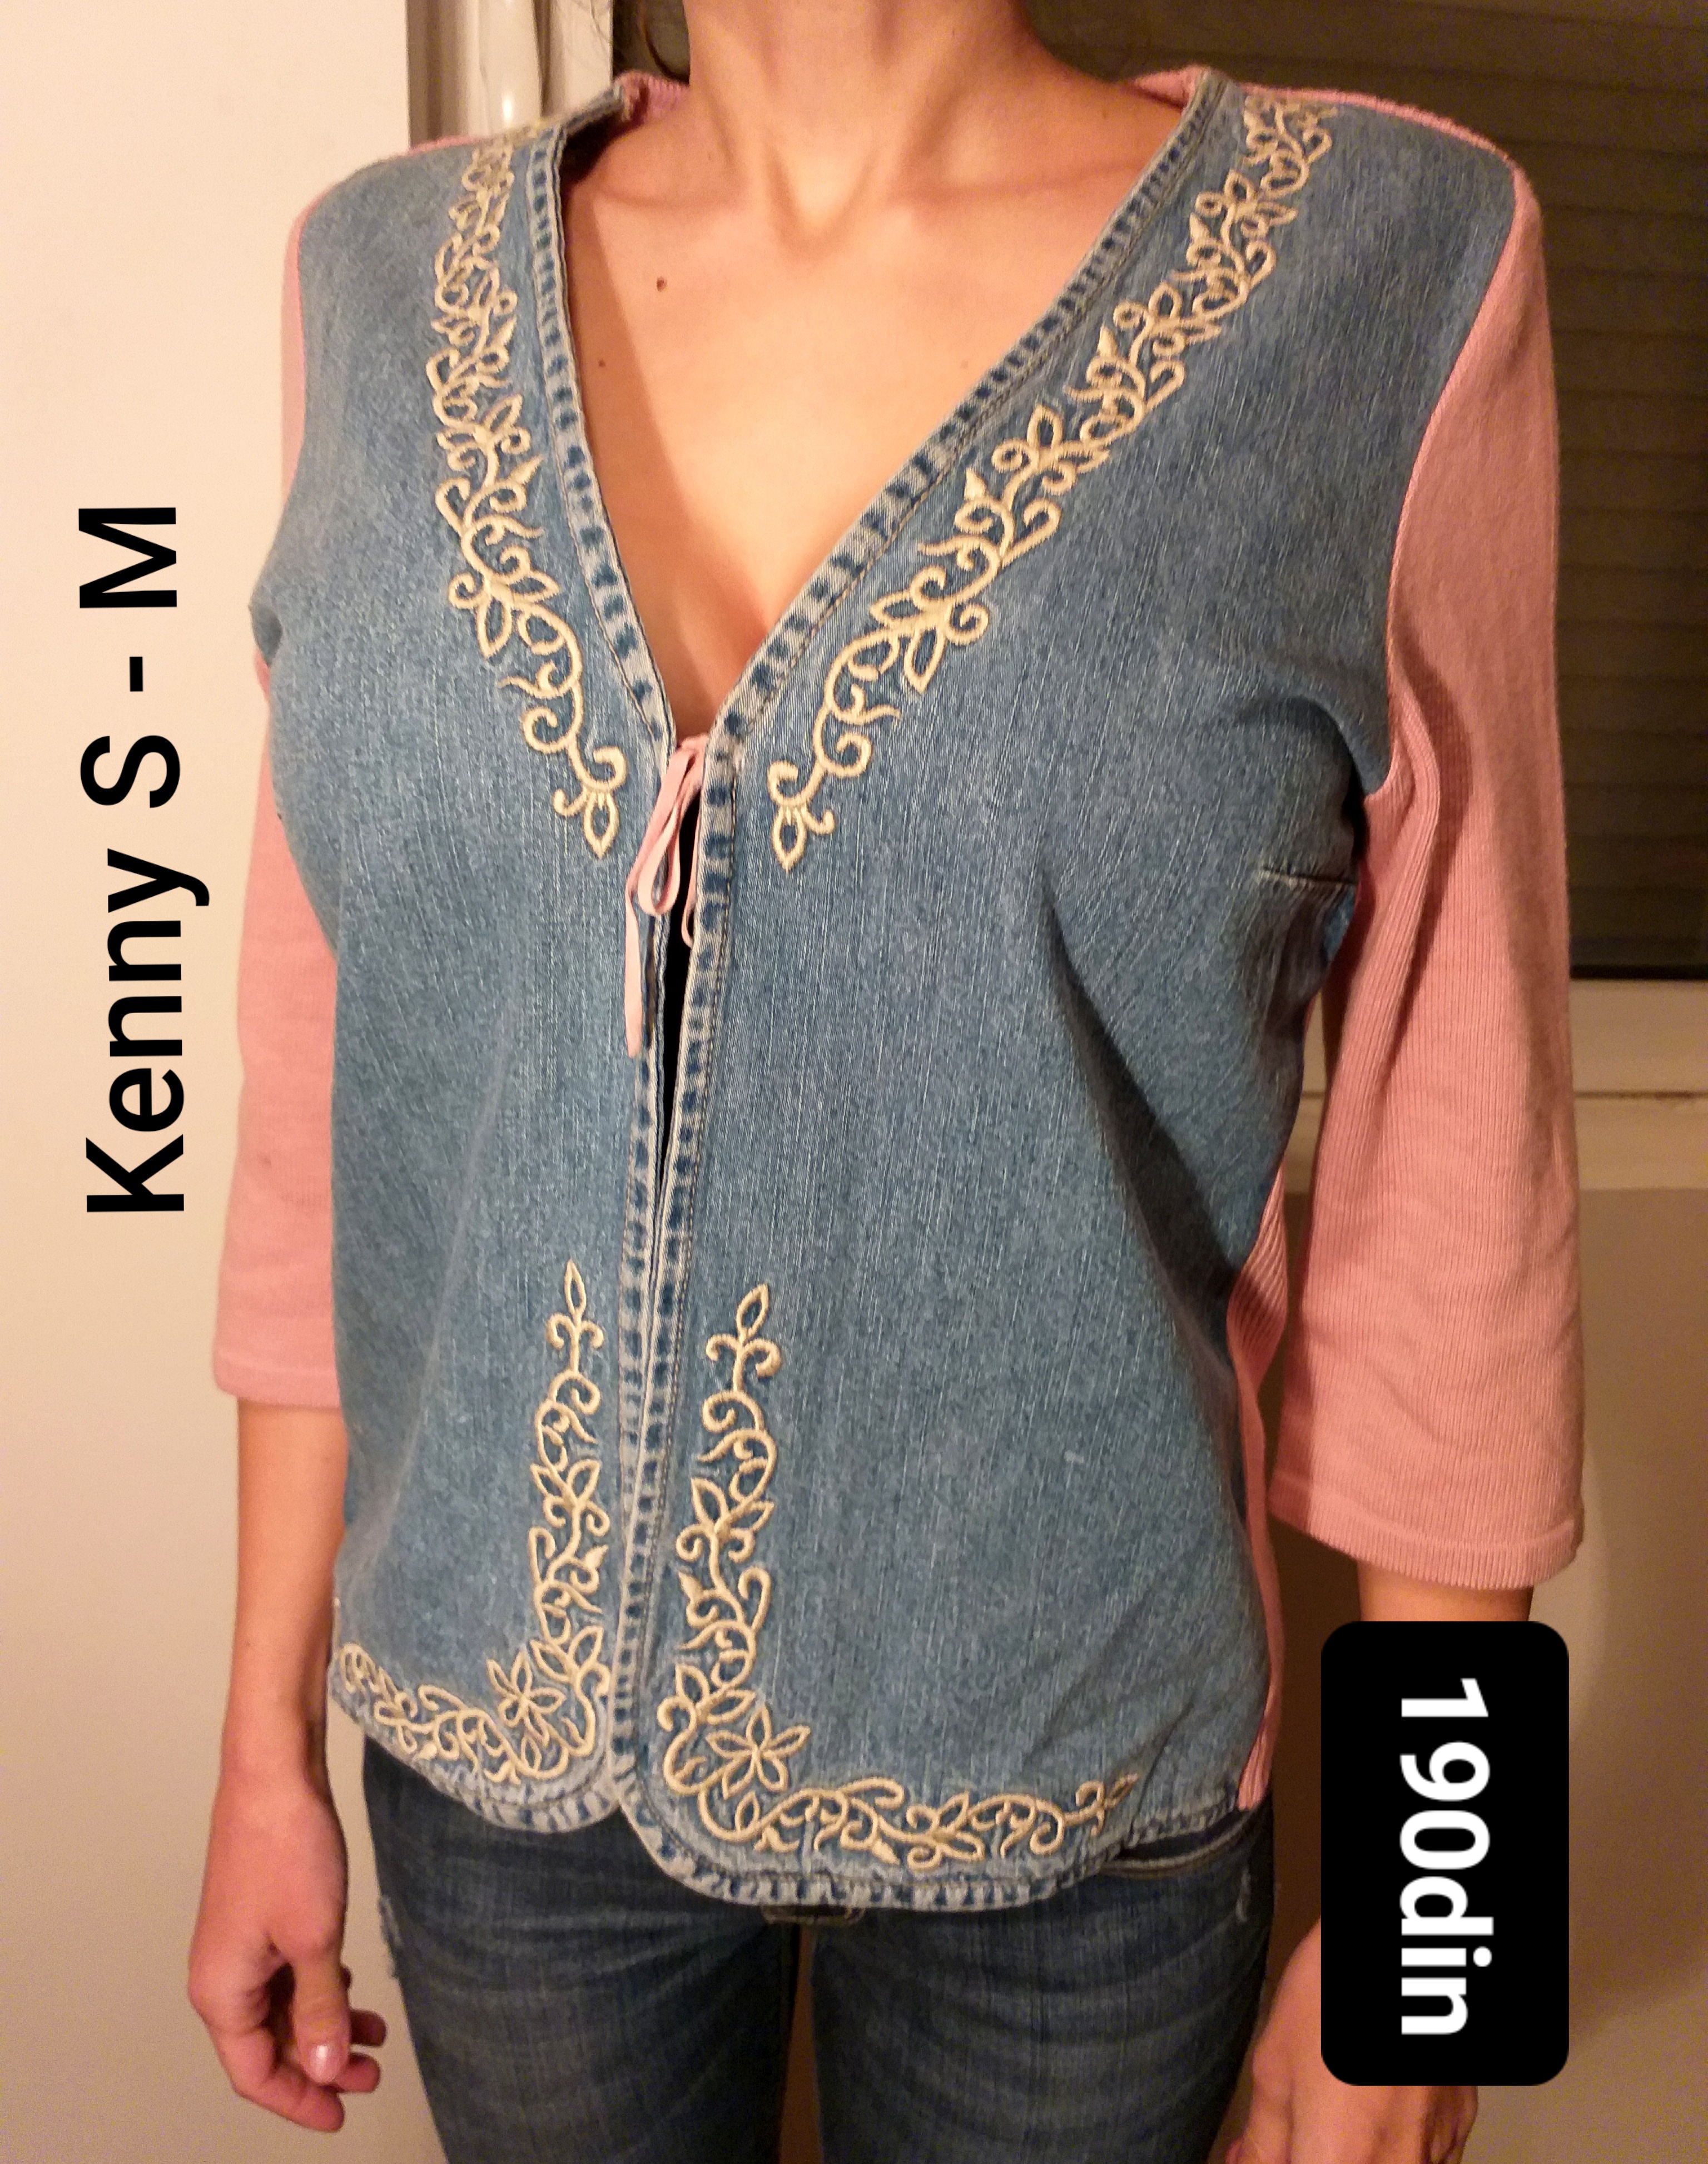 Kenny S ženska košulja bluza teksas M/38